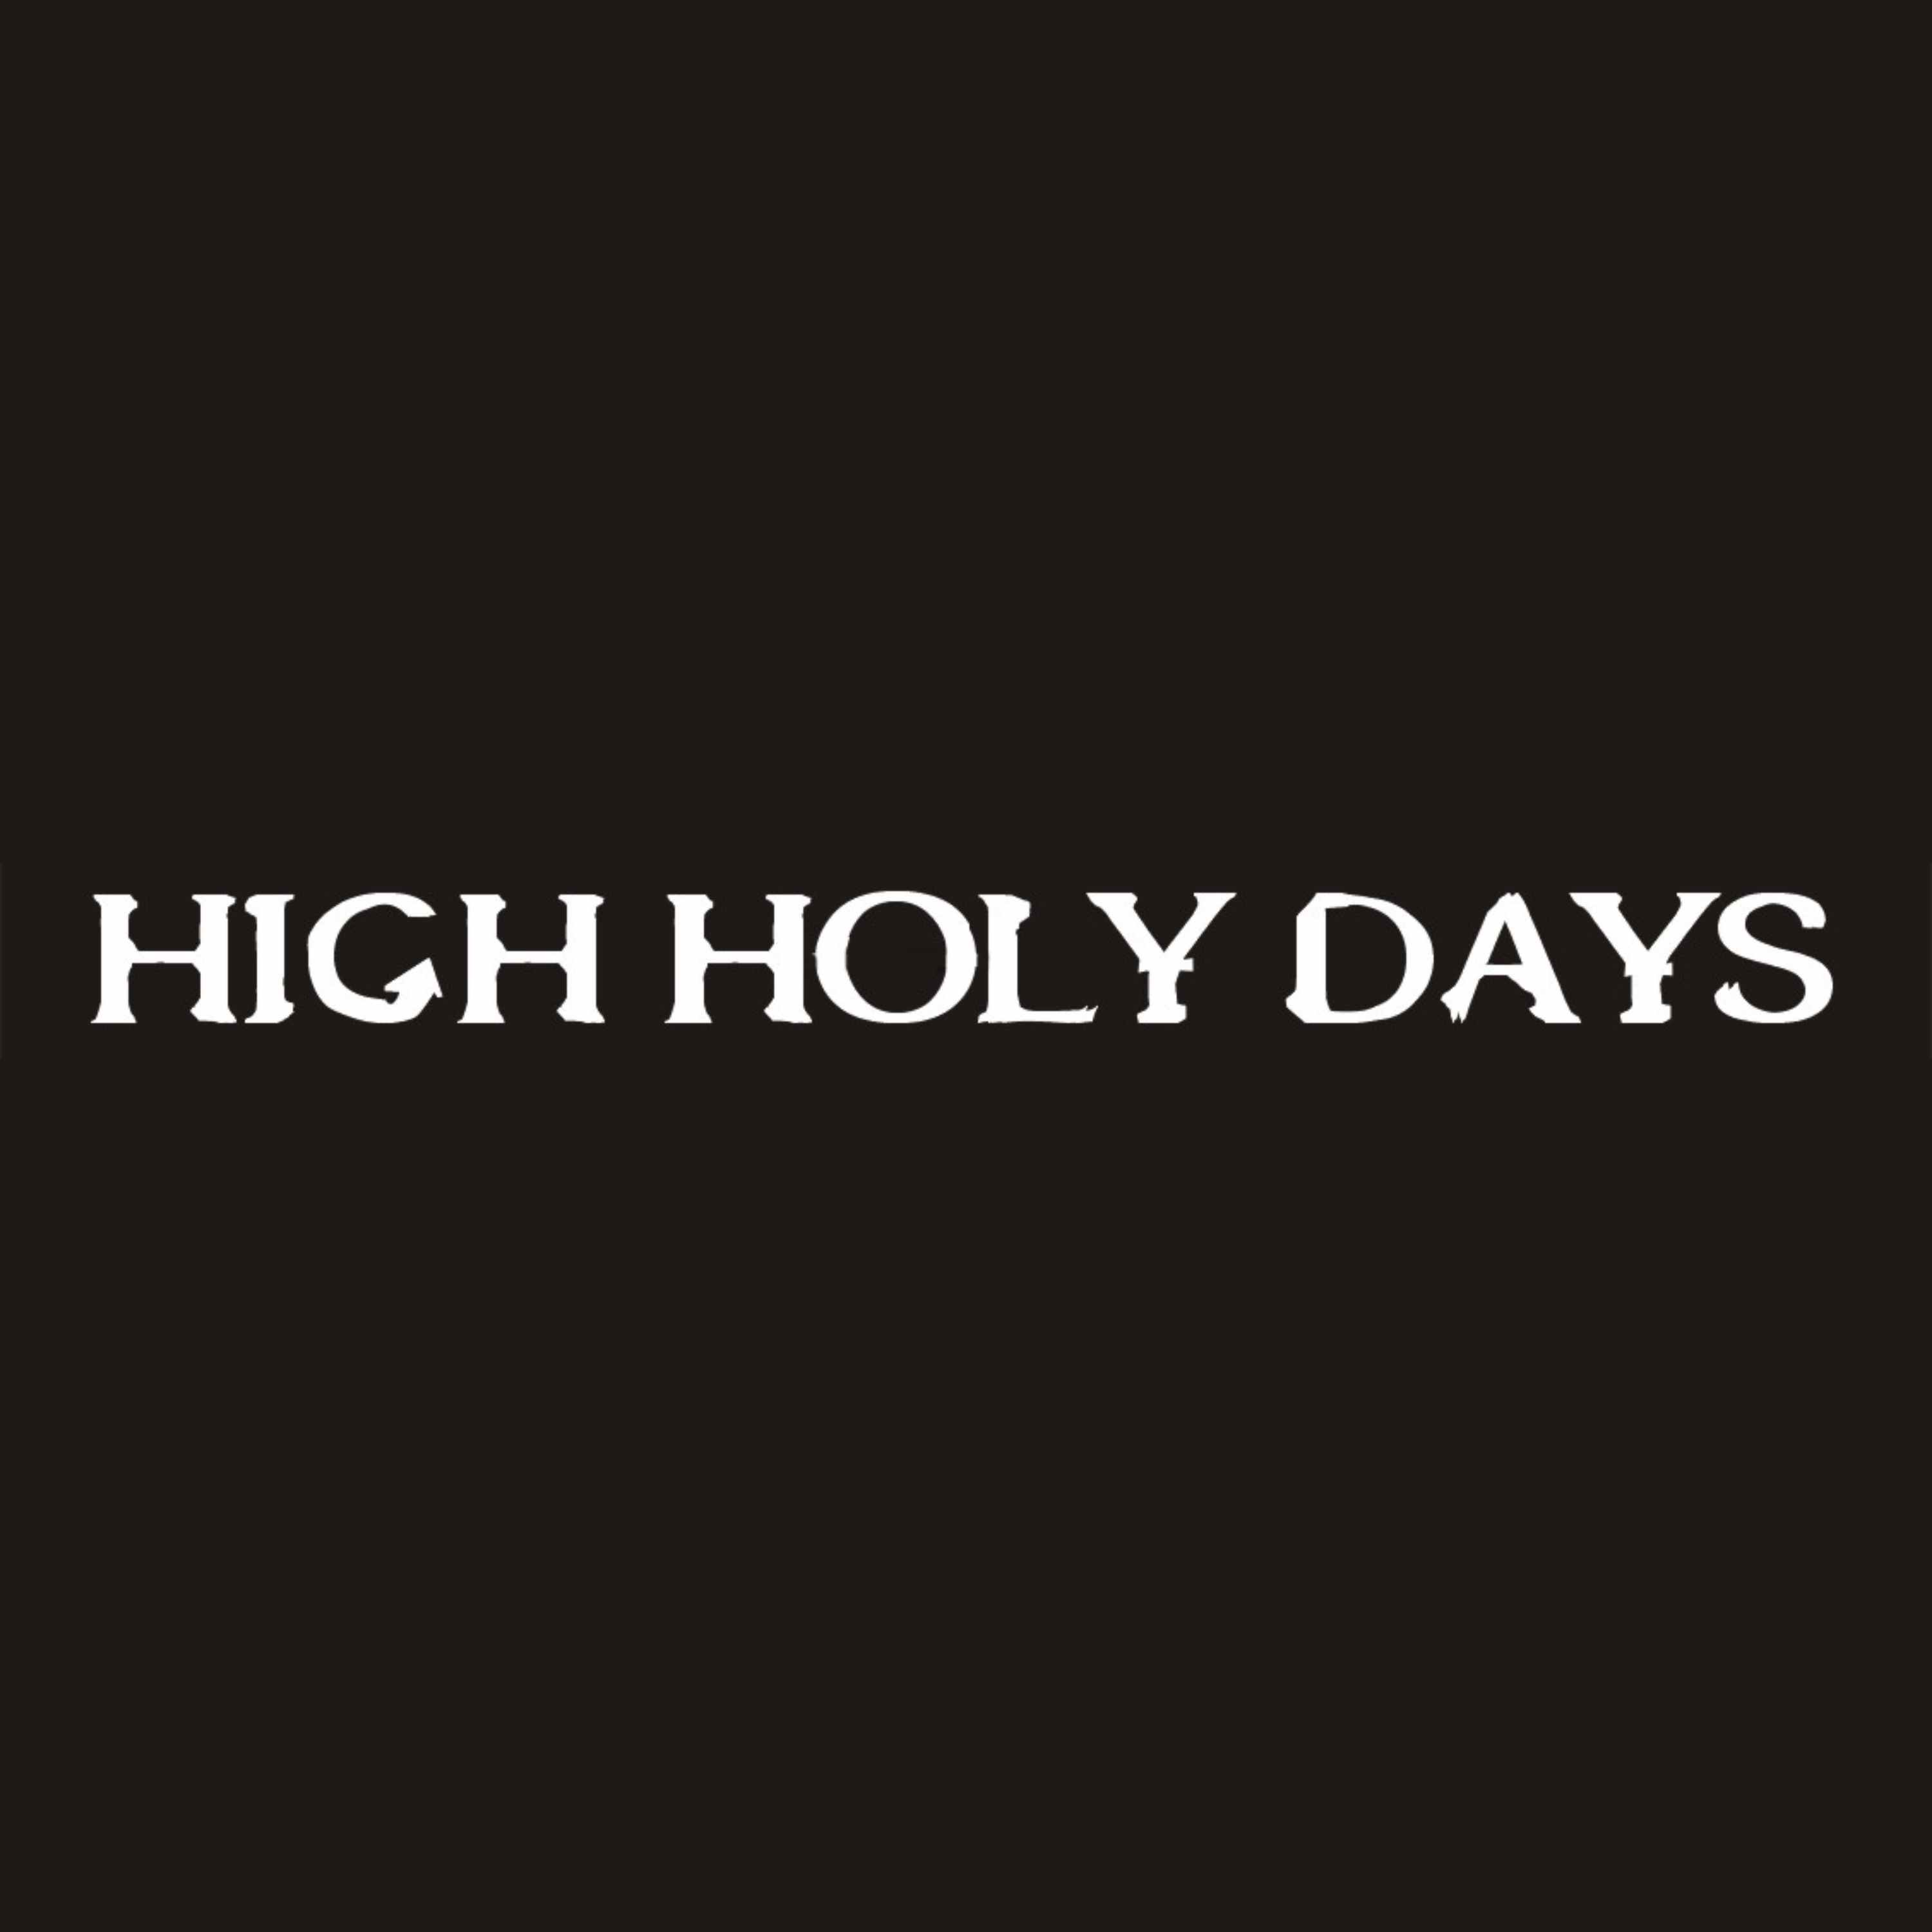 High Holy Days Image